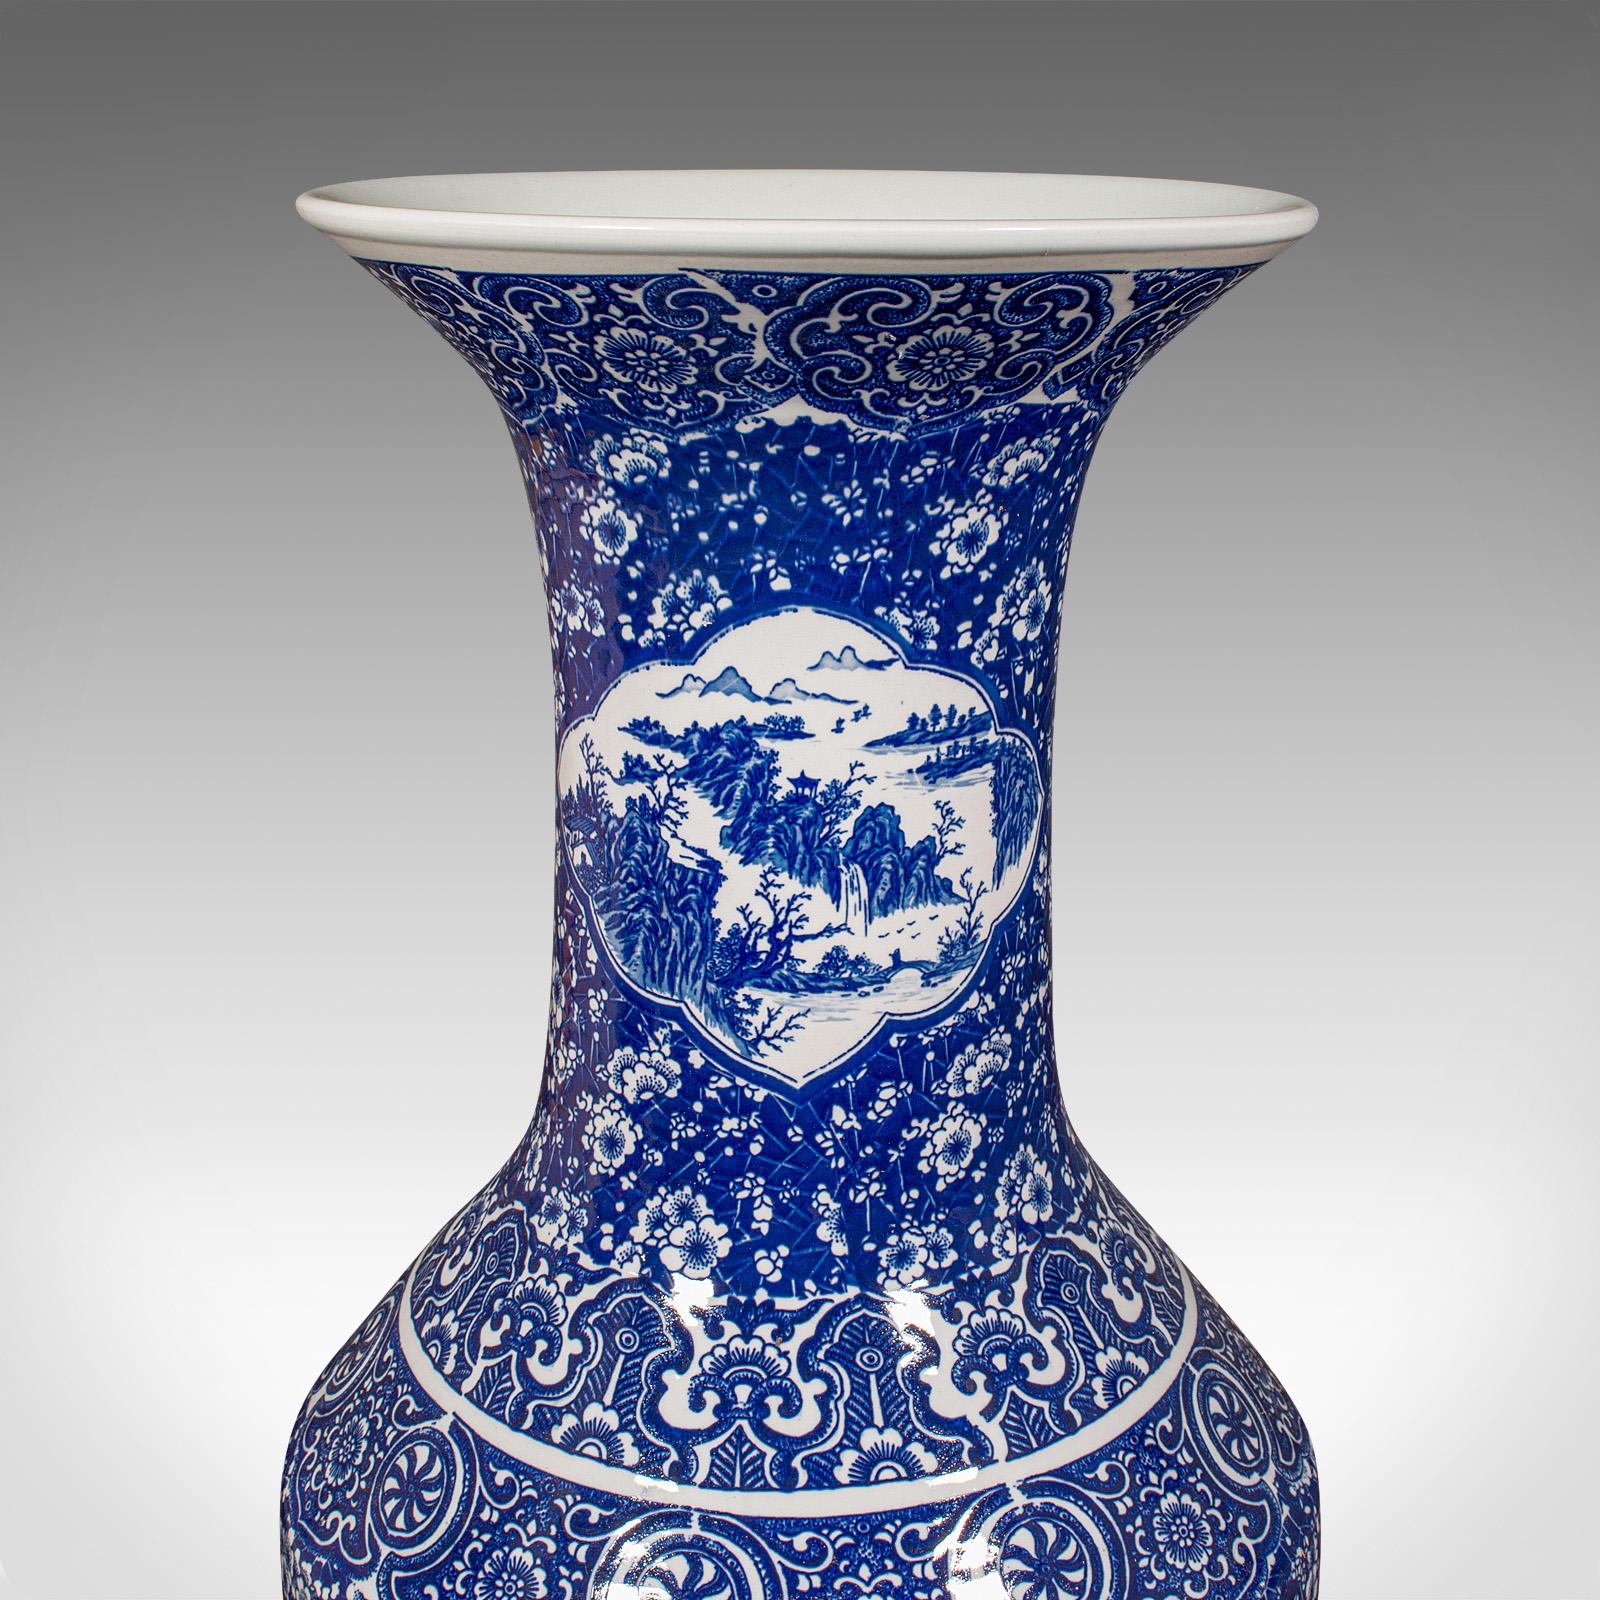 4' Tall Vintage Floor Vase, Chinese, Blue & White, Ceramic, Display, Art Deco For Sale 2